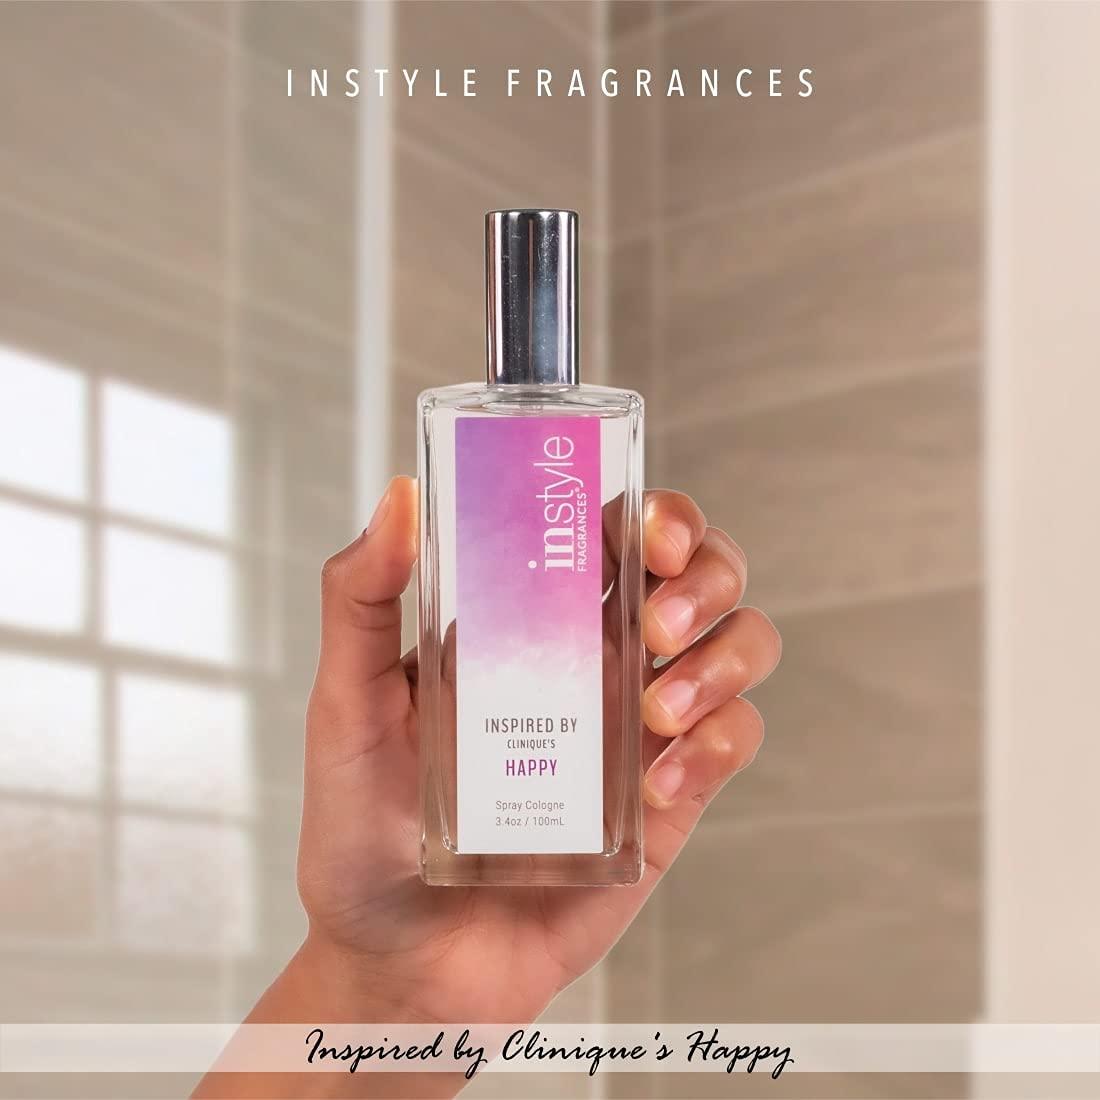 Instyle Fragrances